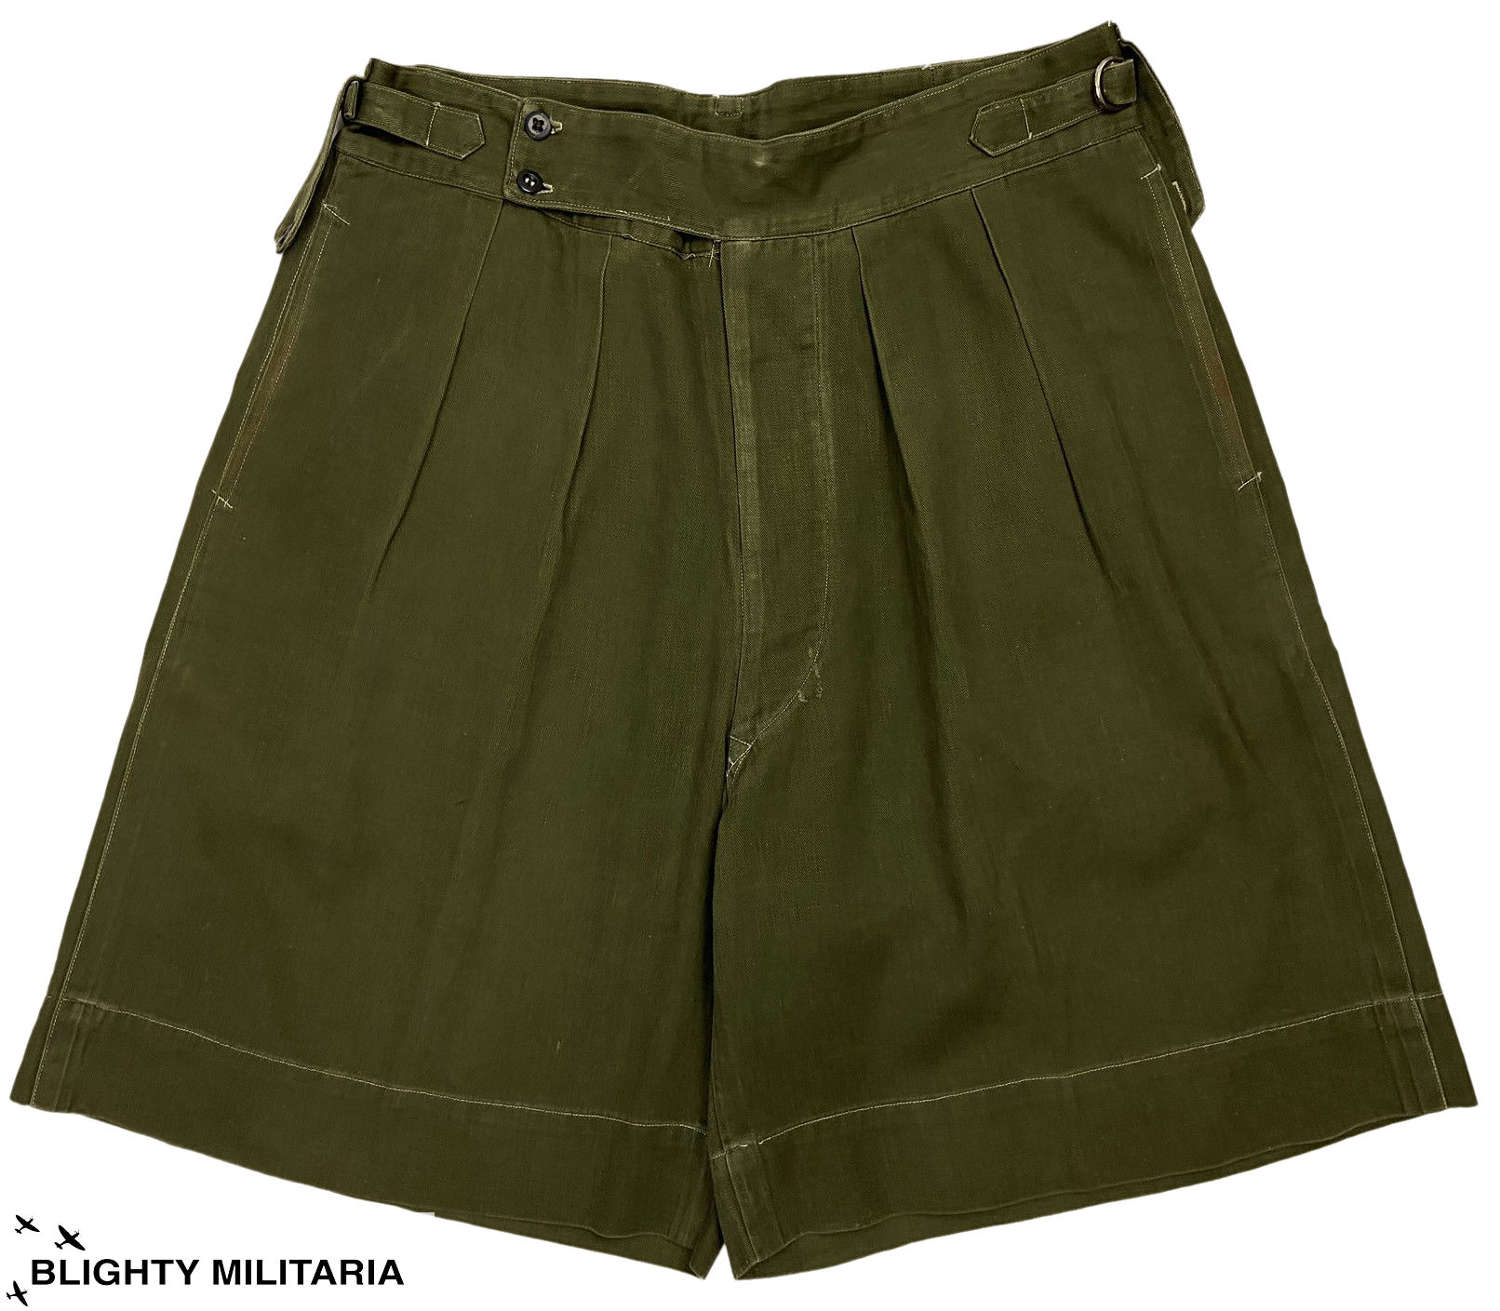 Original 1950s British Jungle Green Shorts - Size 33